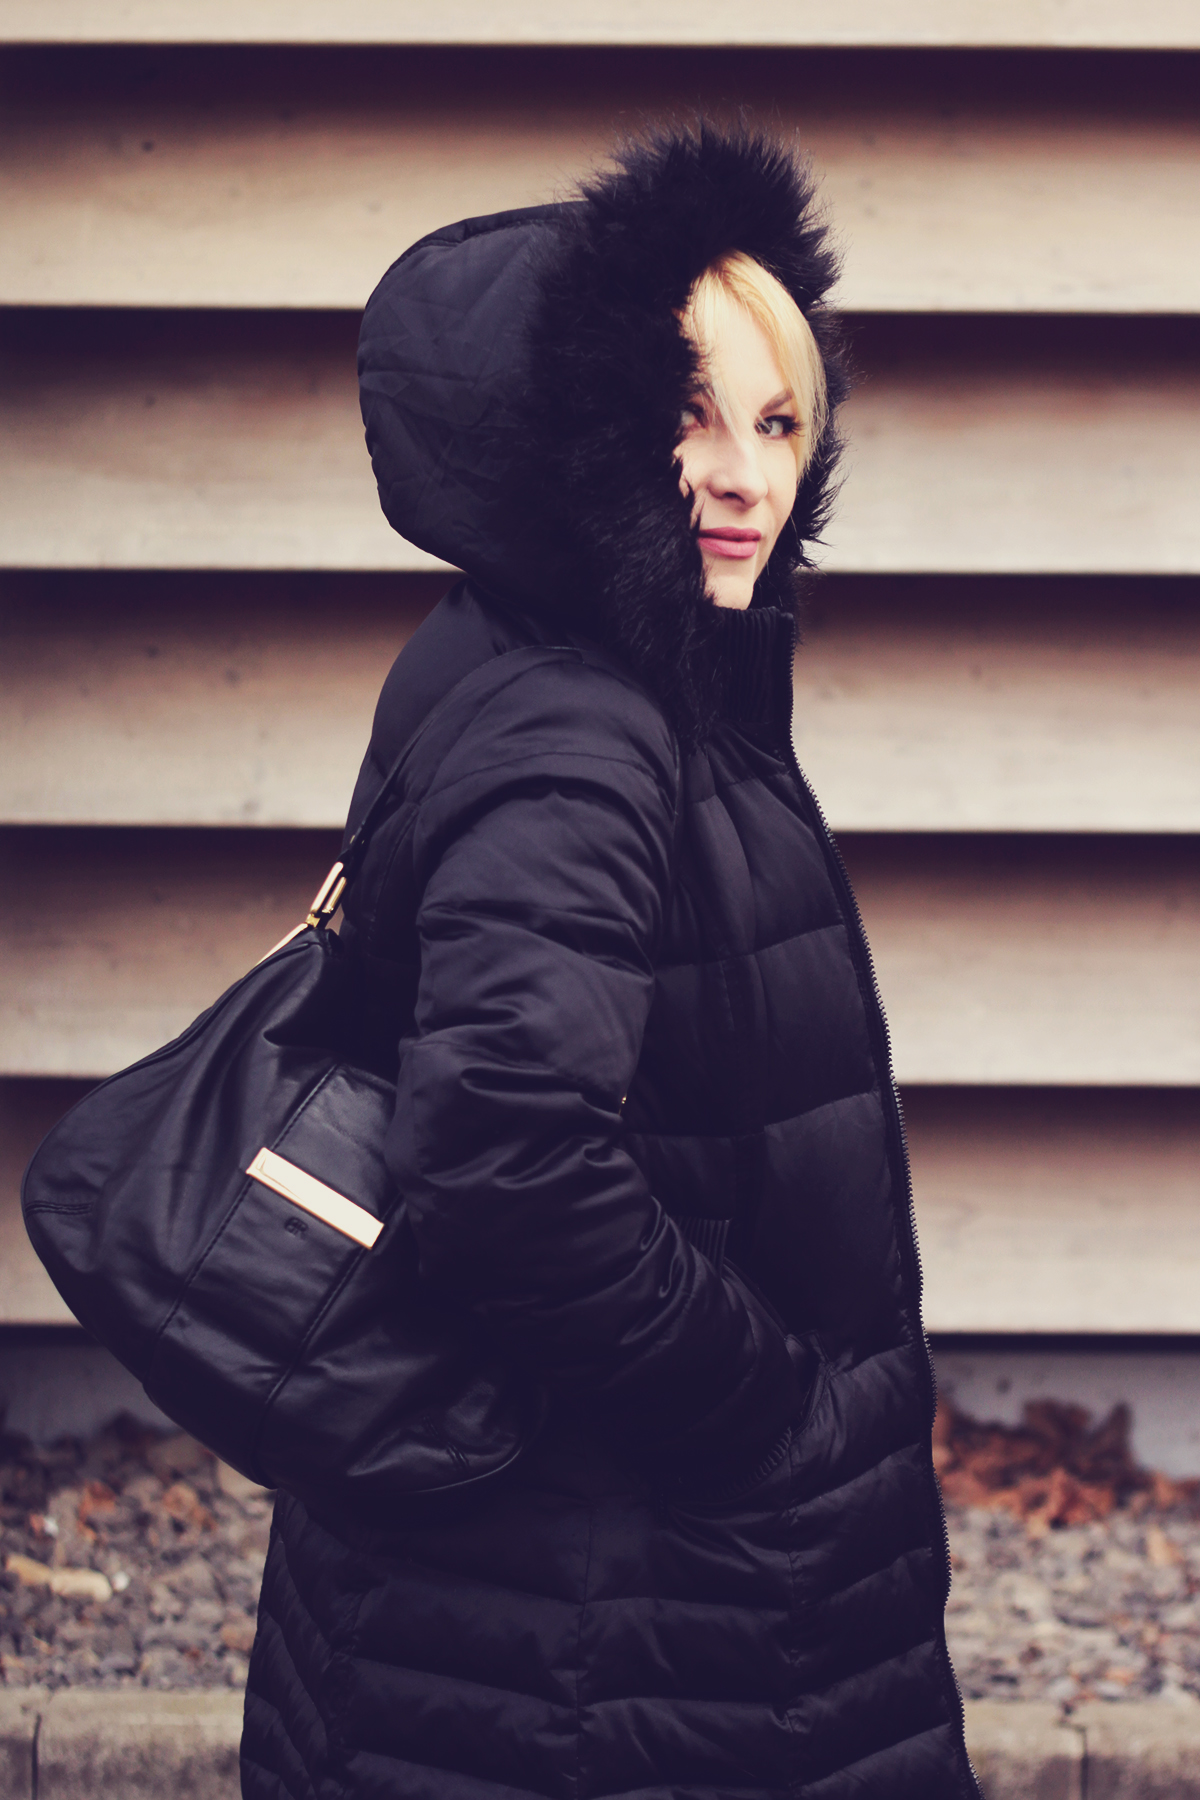 Donna Karan goose down jacket, Banana Republic bag, all black look, winter look